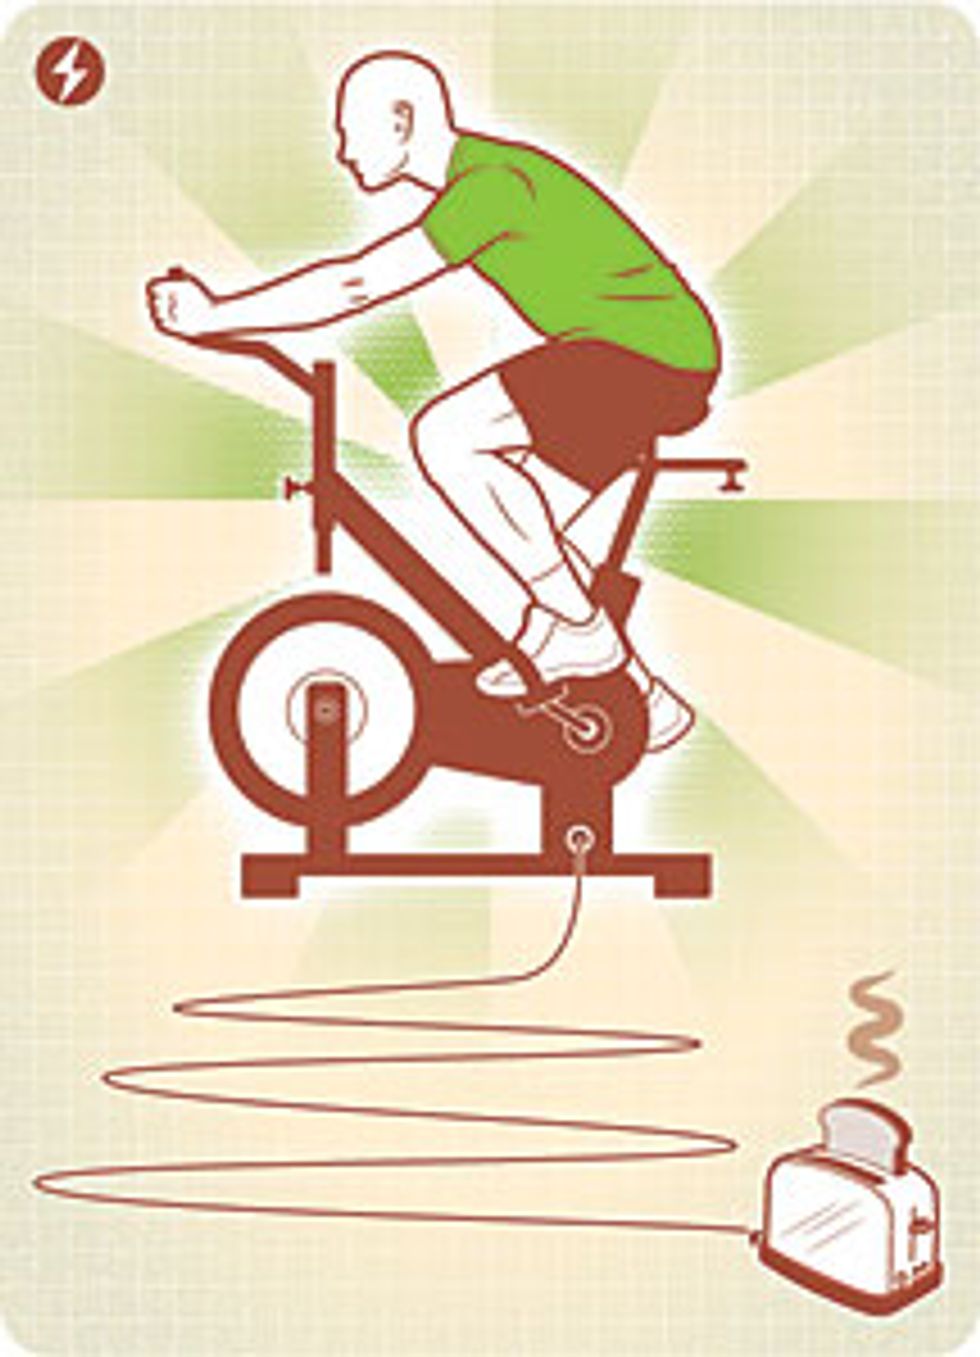 stationary bicycle illustration